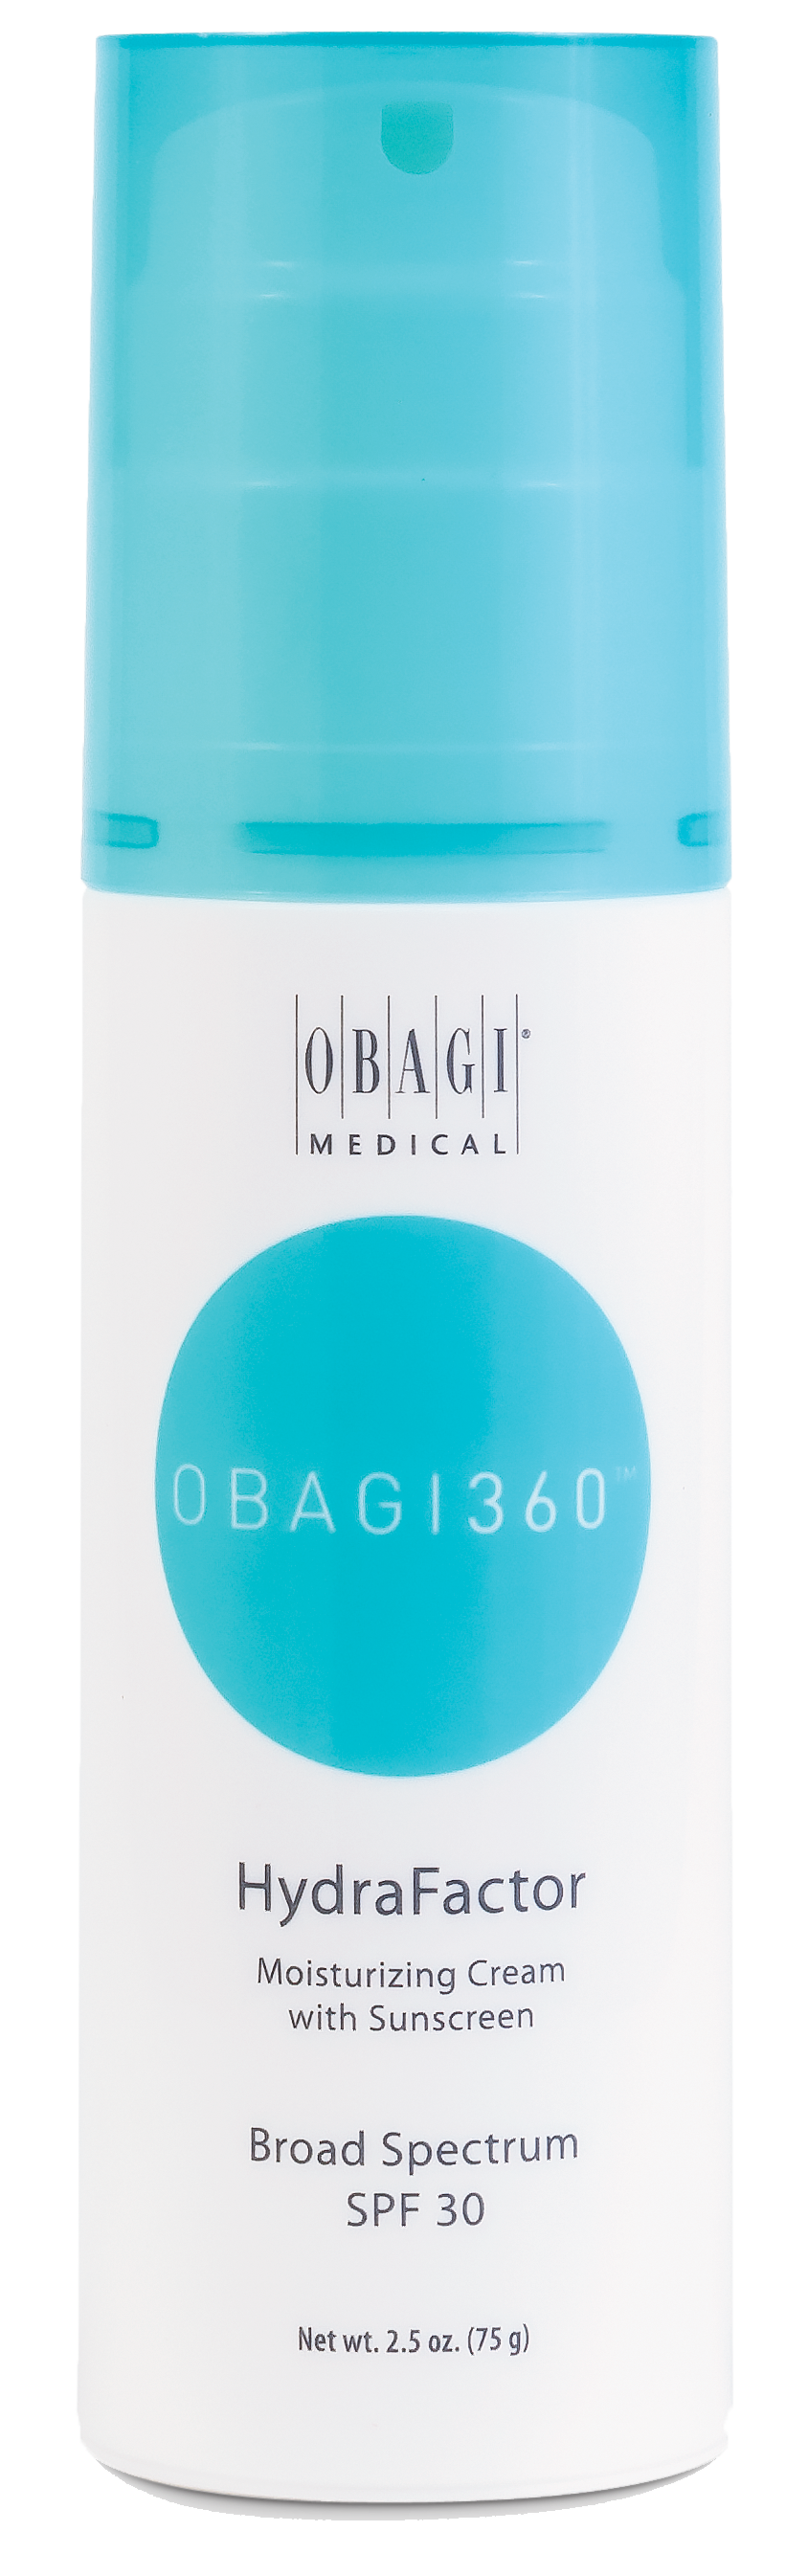 Obagi | Obagi360 Hydrafactor Broad Spectrum SPF 30 (75g)